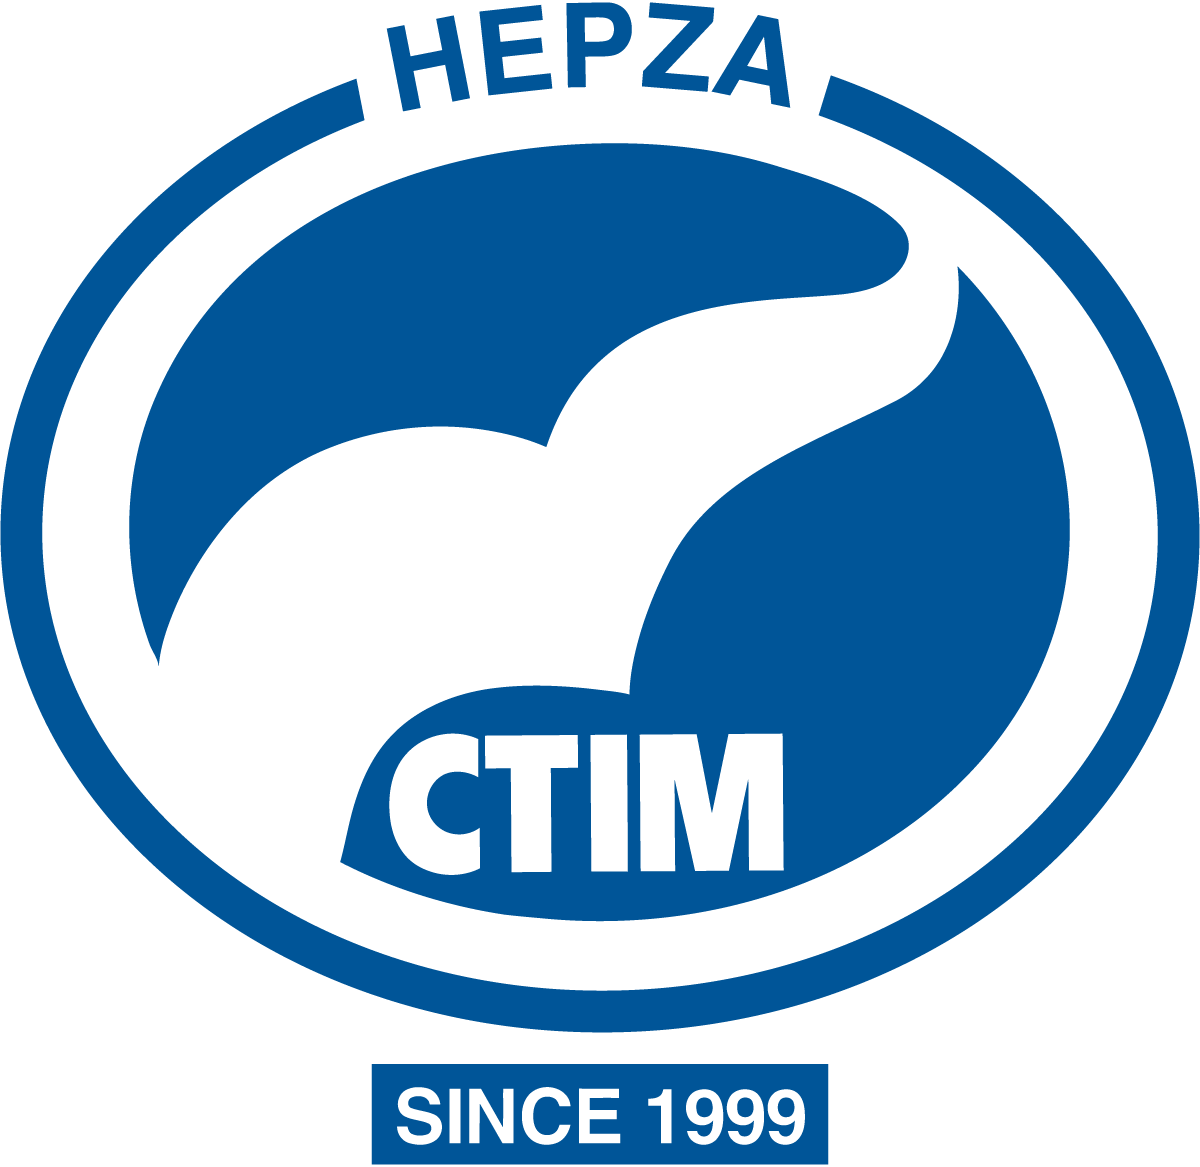 Logo CTIM